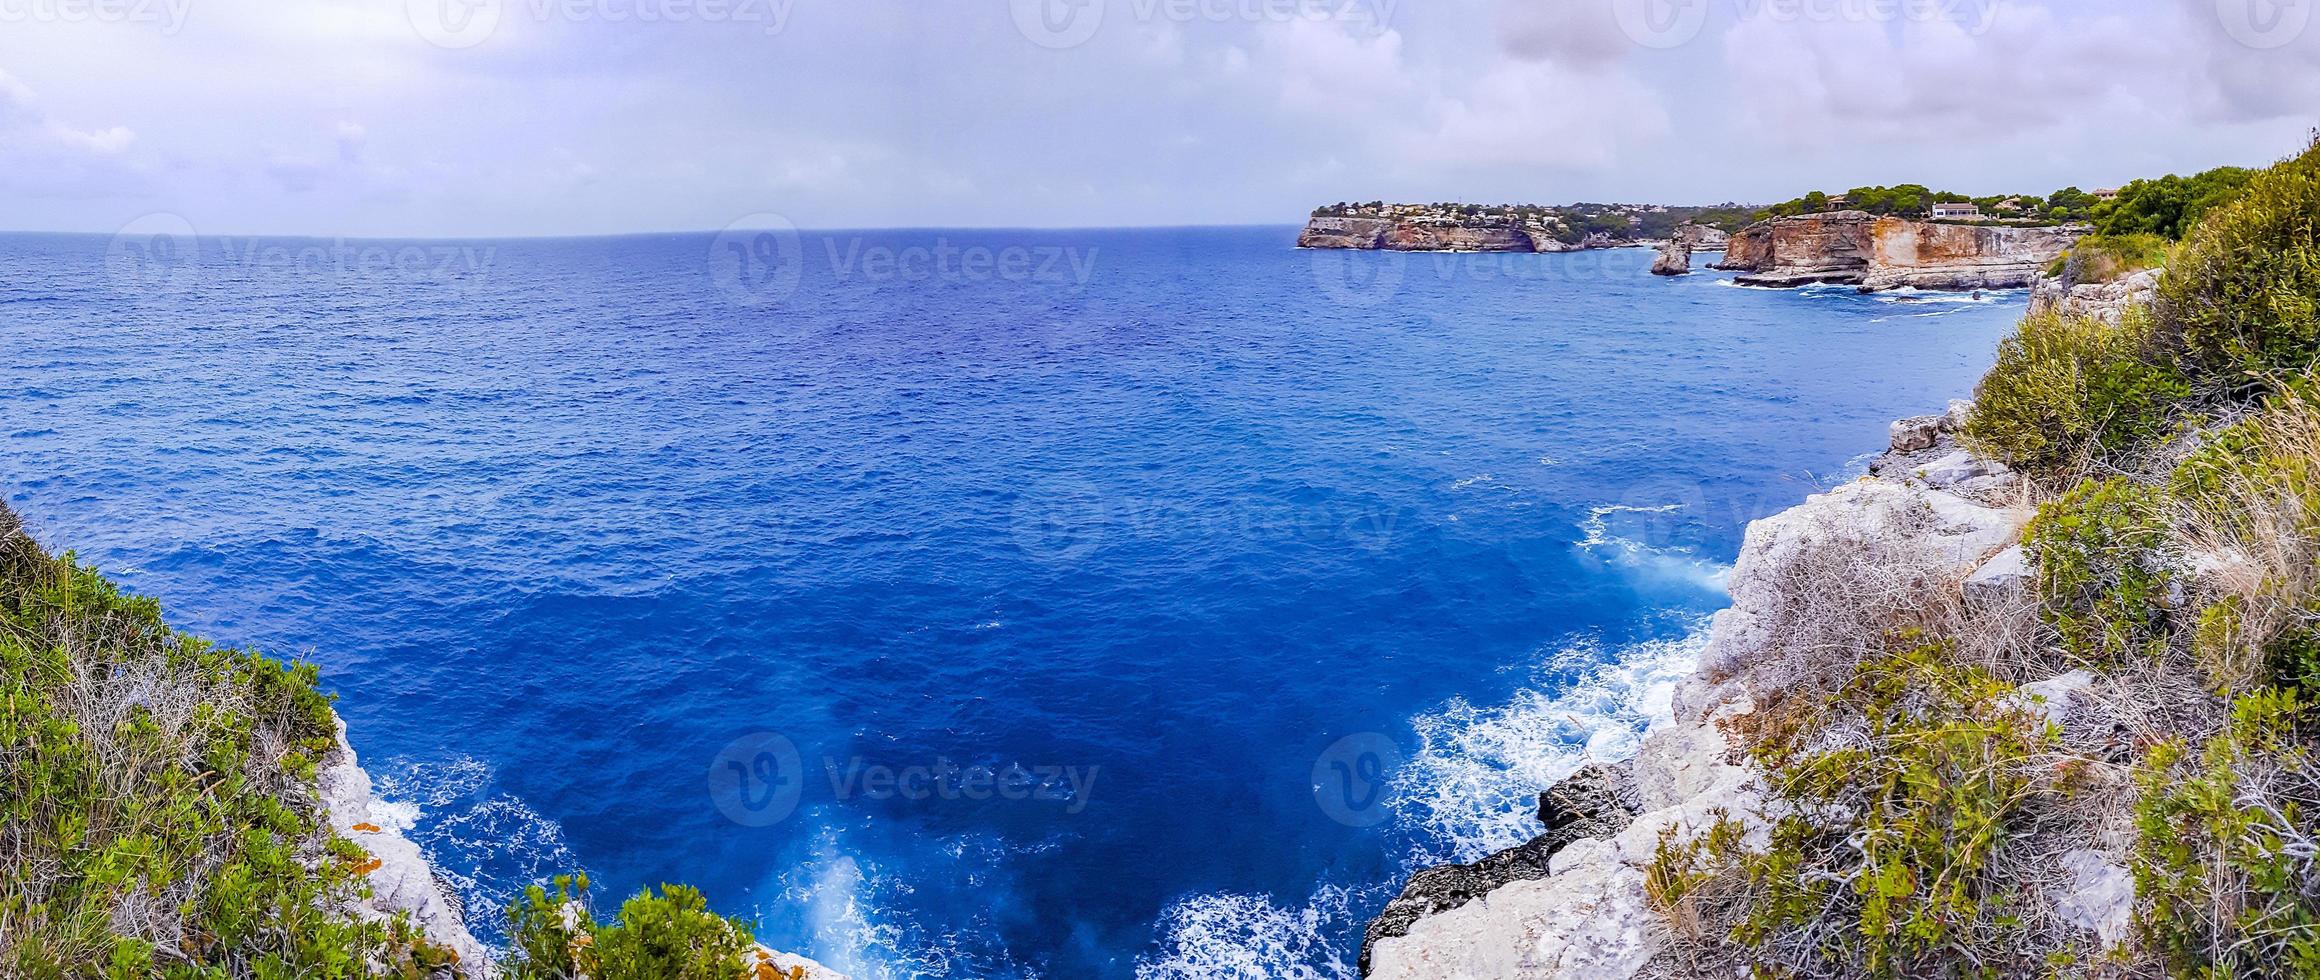 panorama kliffen landschap baai van cala santanyi in mallorca, spanje. foto